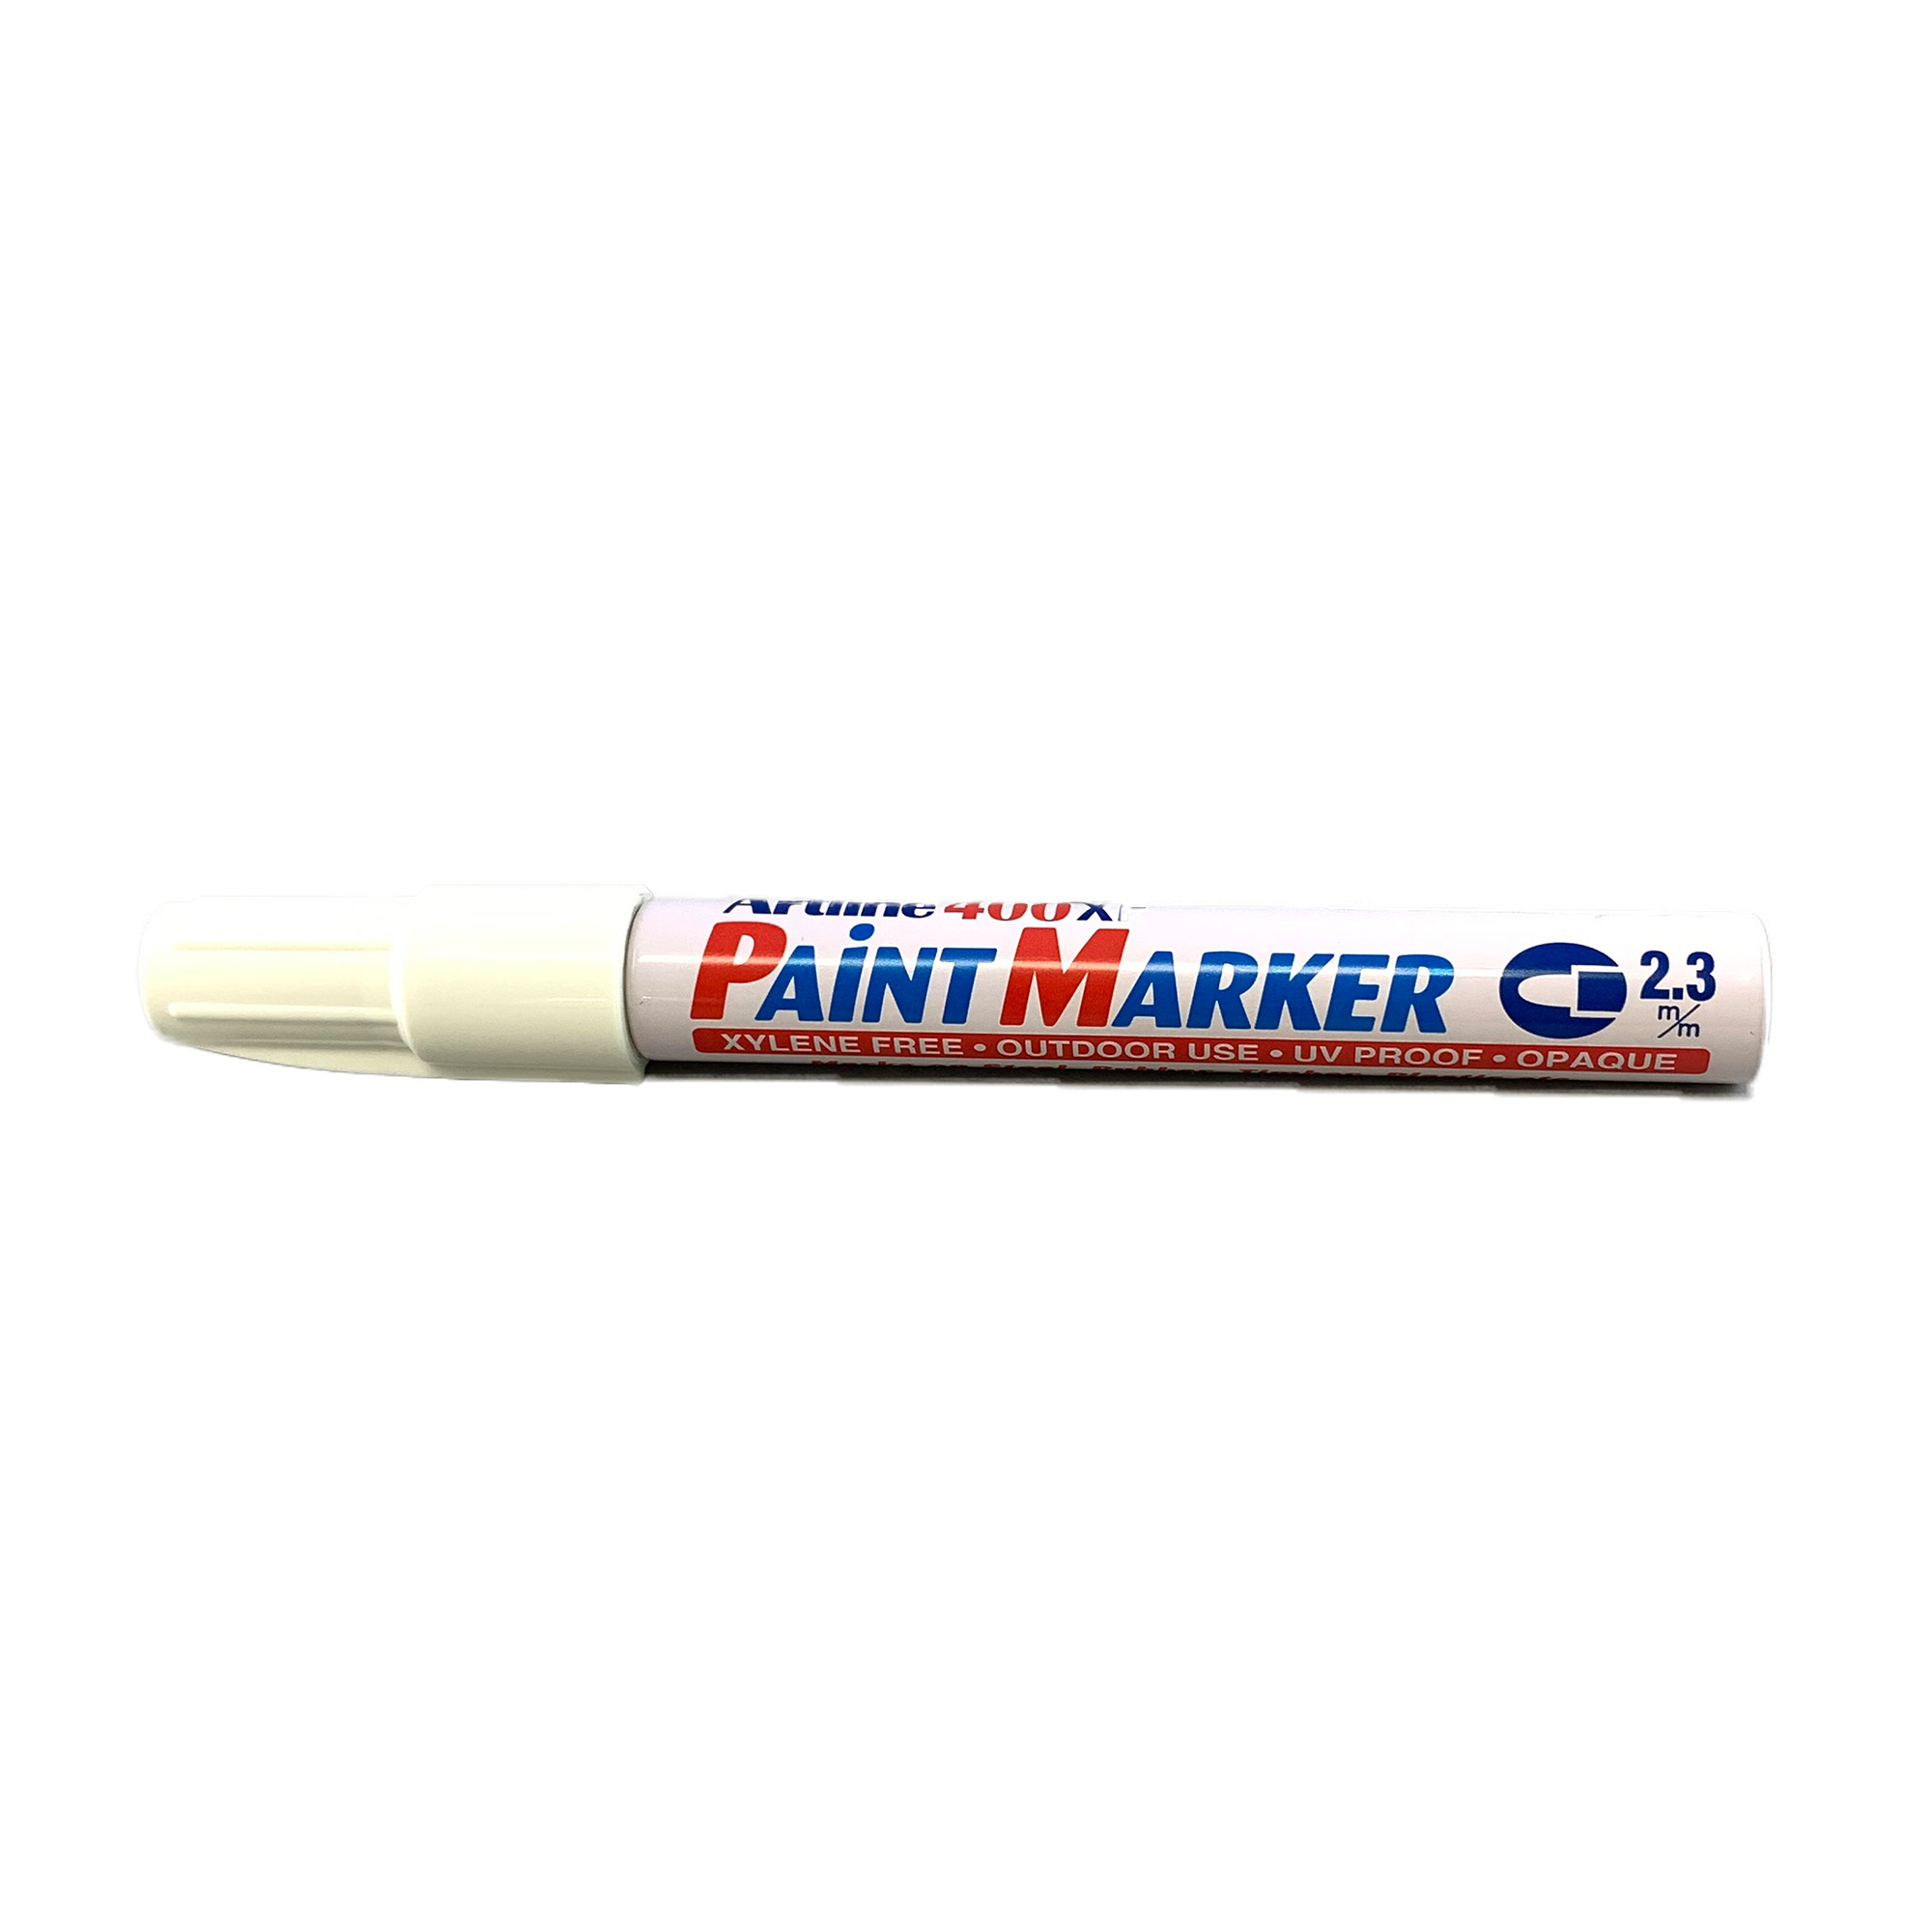 Artline Permanent Marker in White